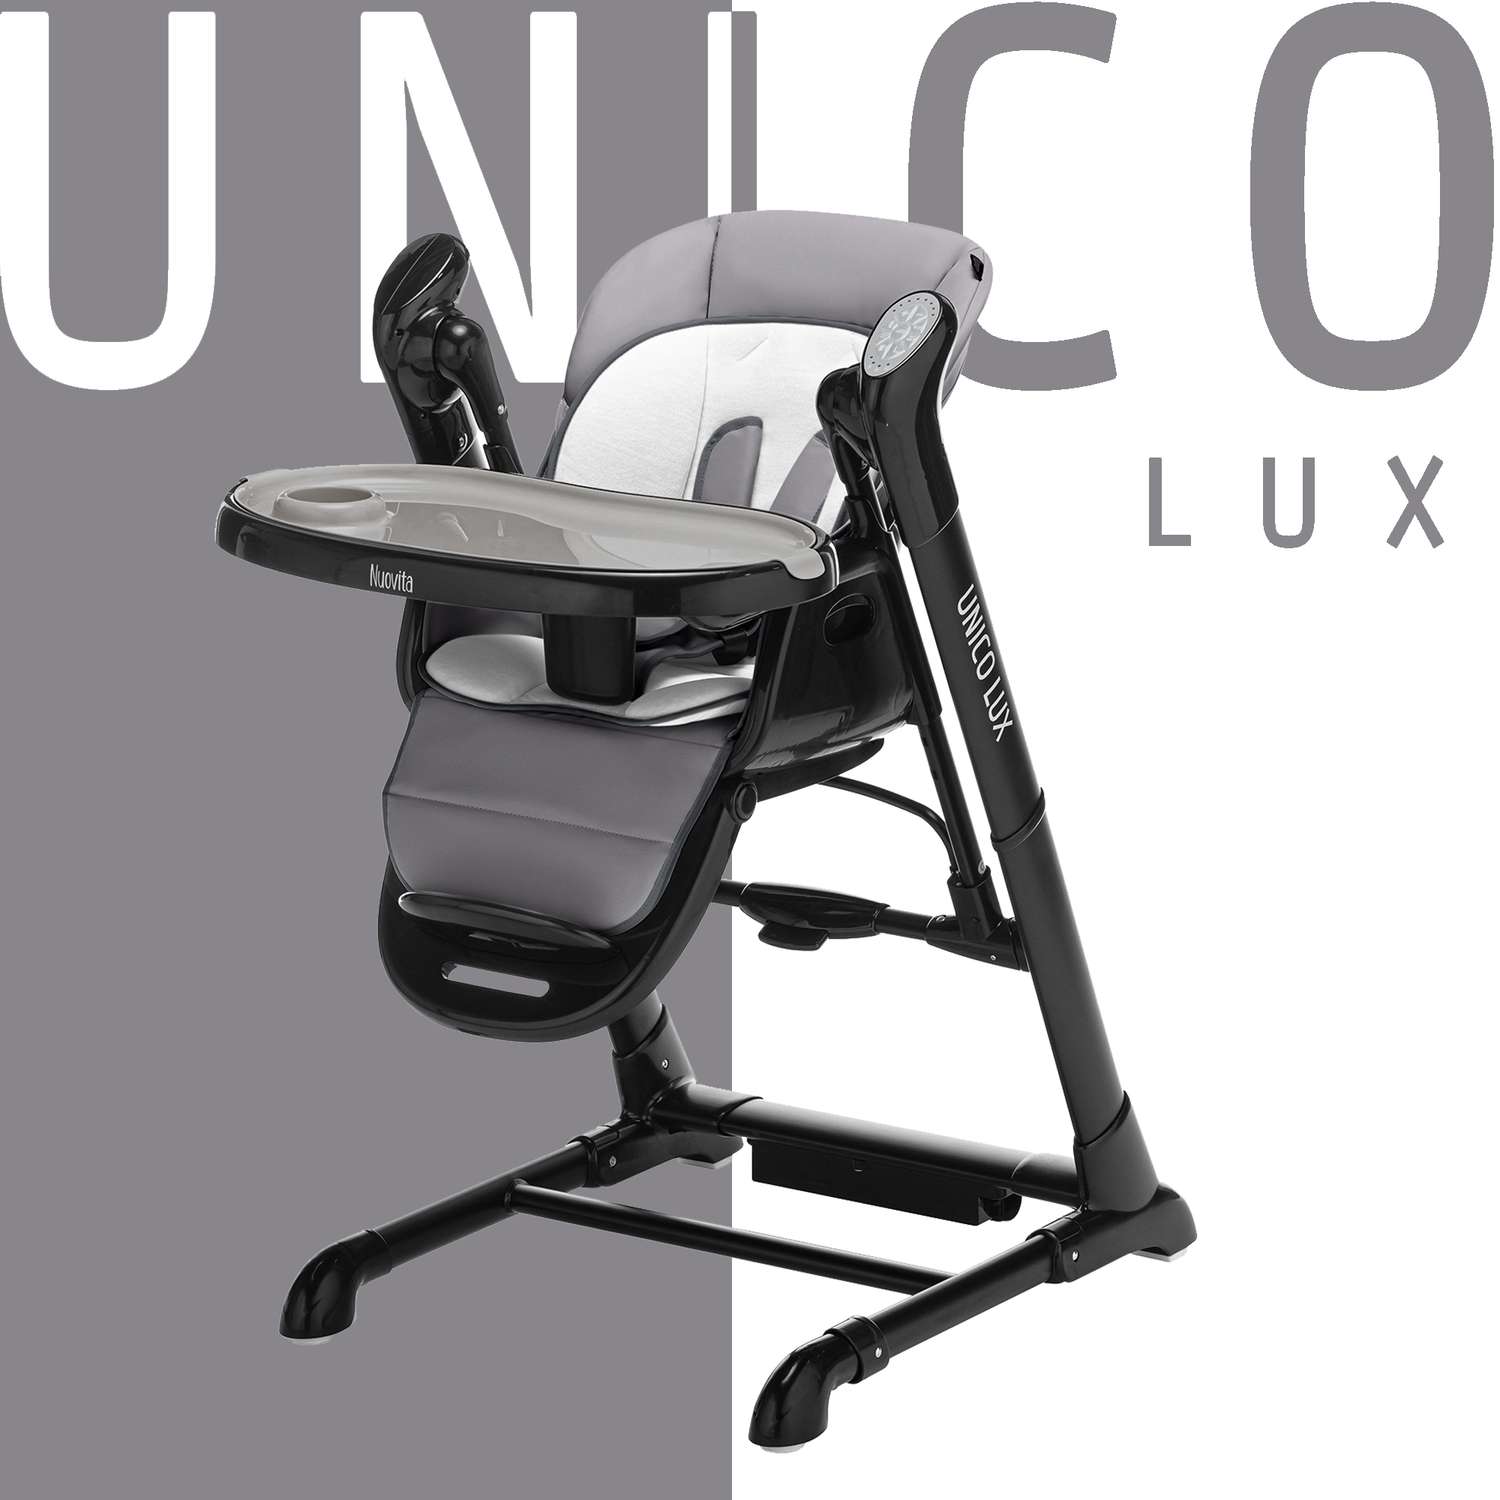 Стульчик для кормления 3 в 1 Nuovita Unico Lux Nero серый - фото 4